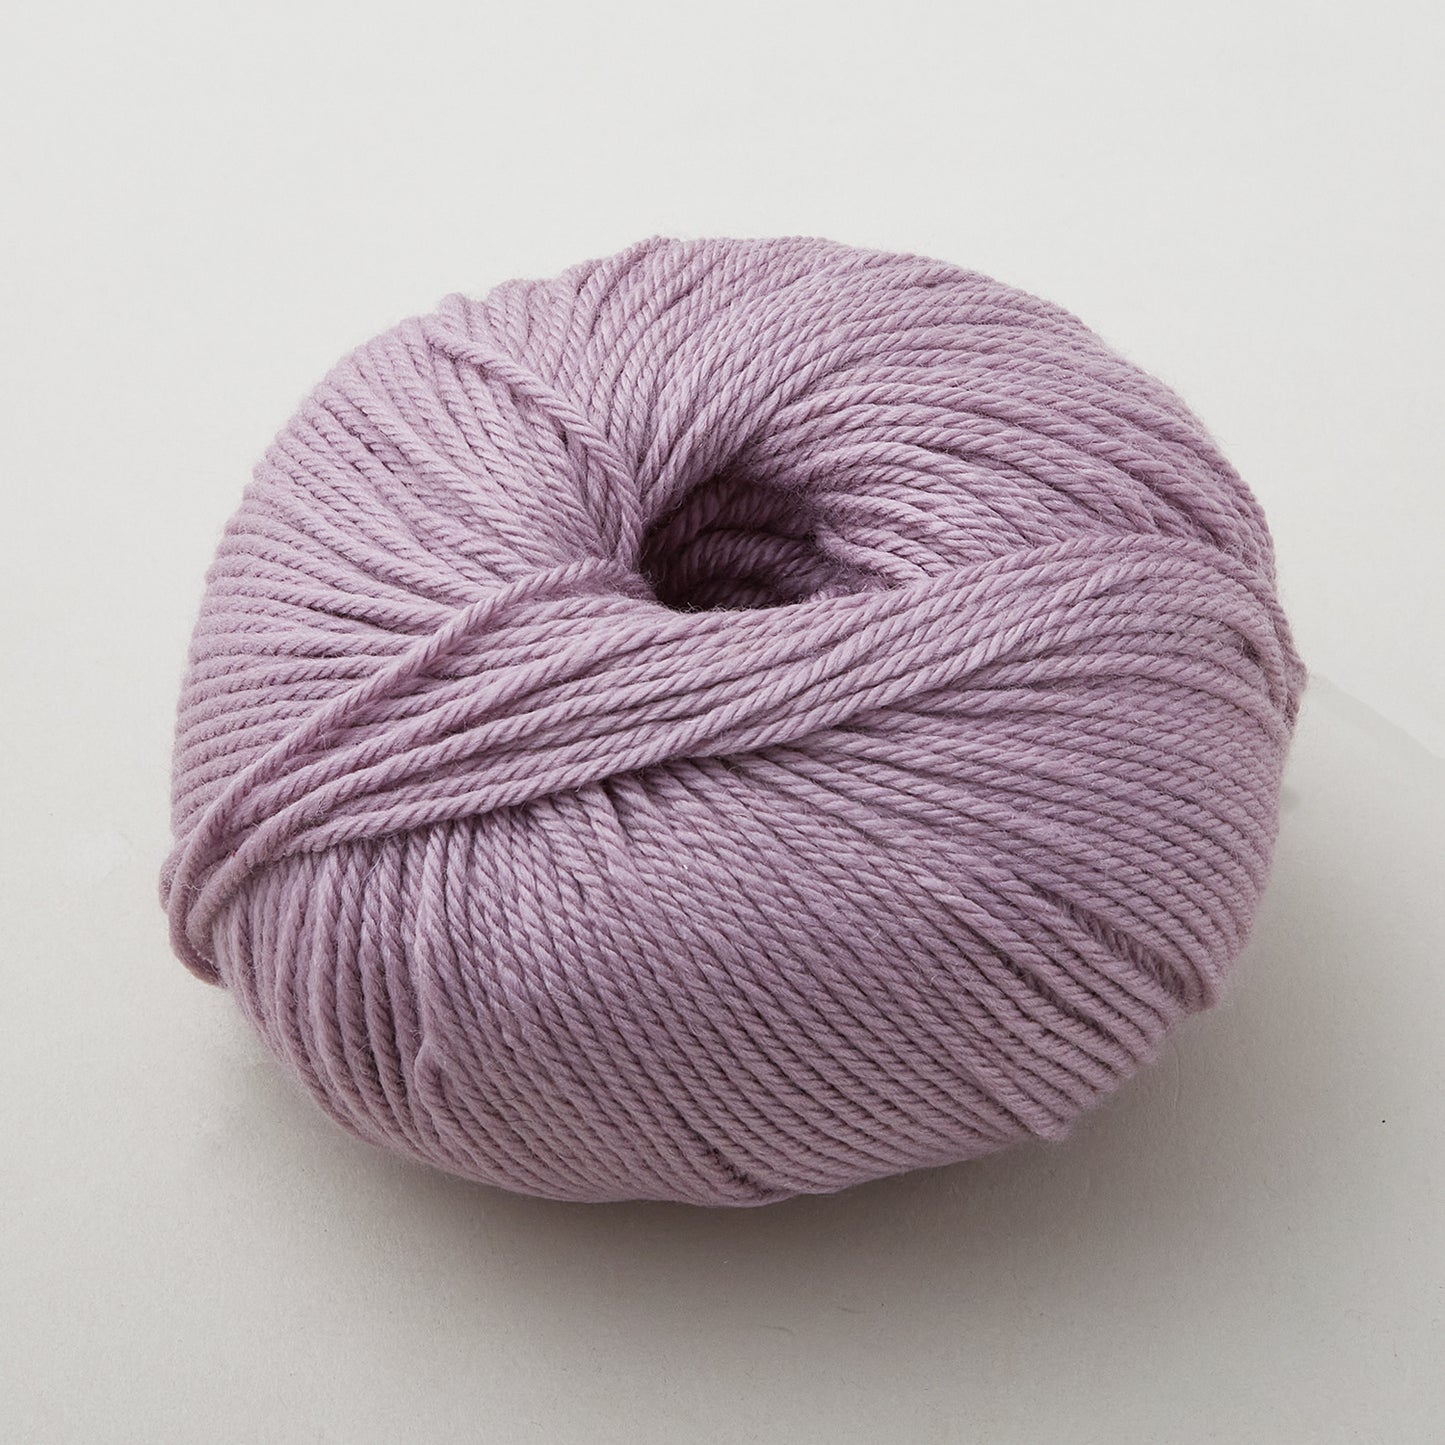 Pinwheels for Baby Blanket Knit Kit - Lavender Alternative View #1